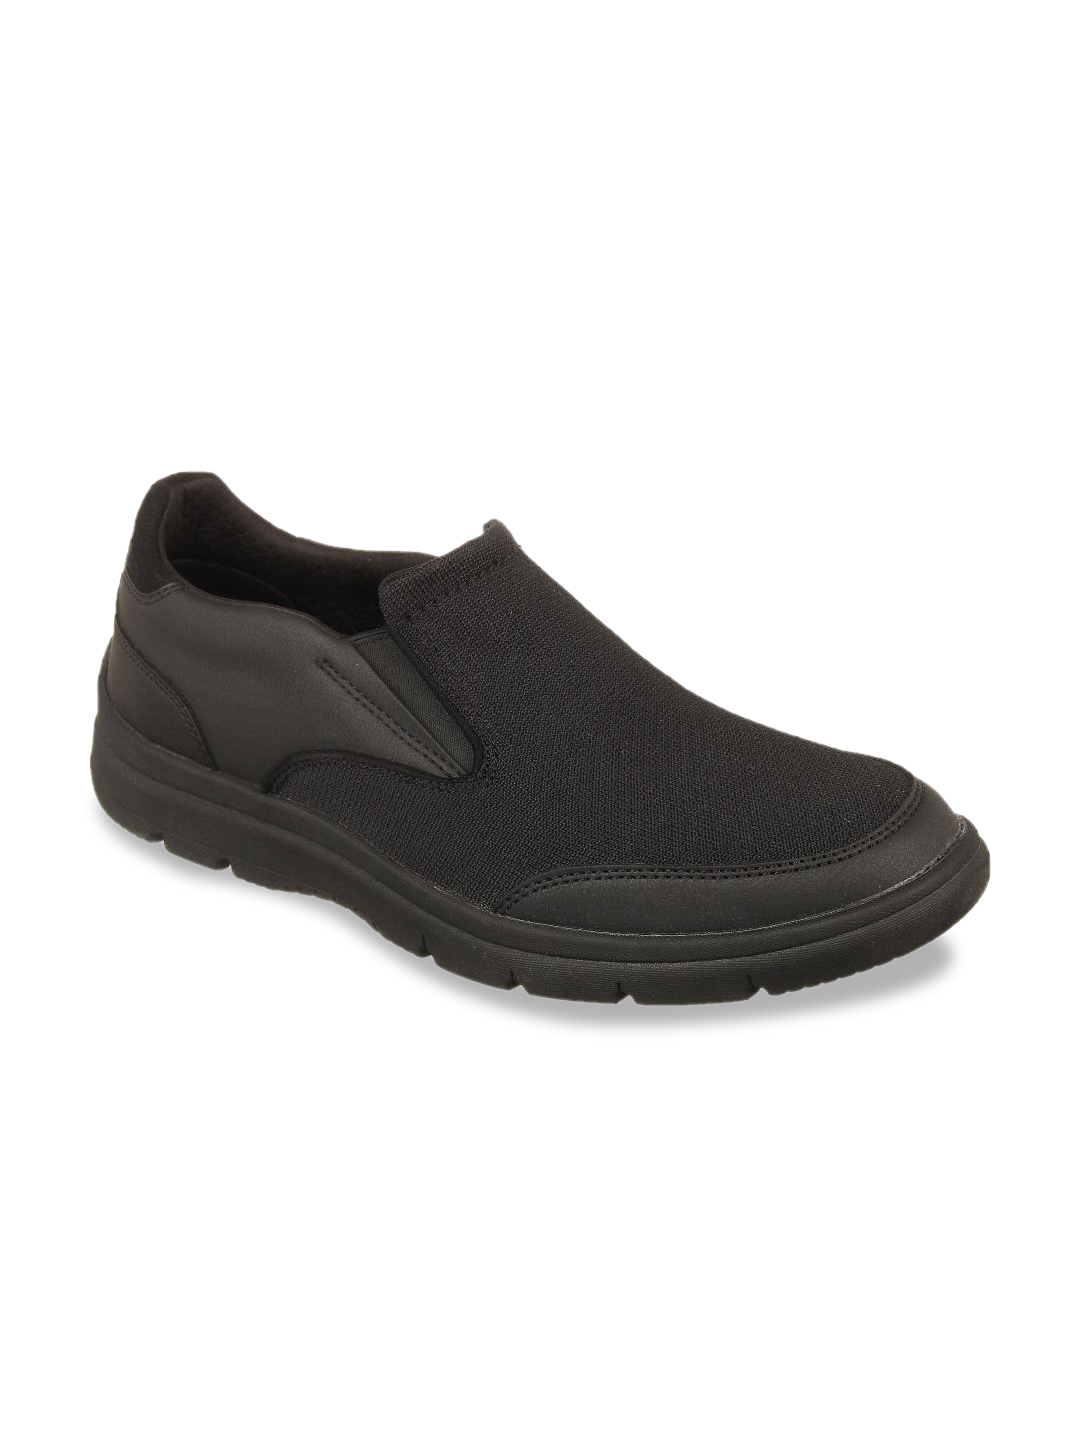 Buy Clarks Men Black Slip On Sneakers - Casual Shoes for Men 9491733 ...